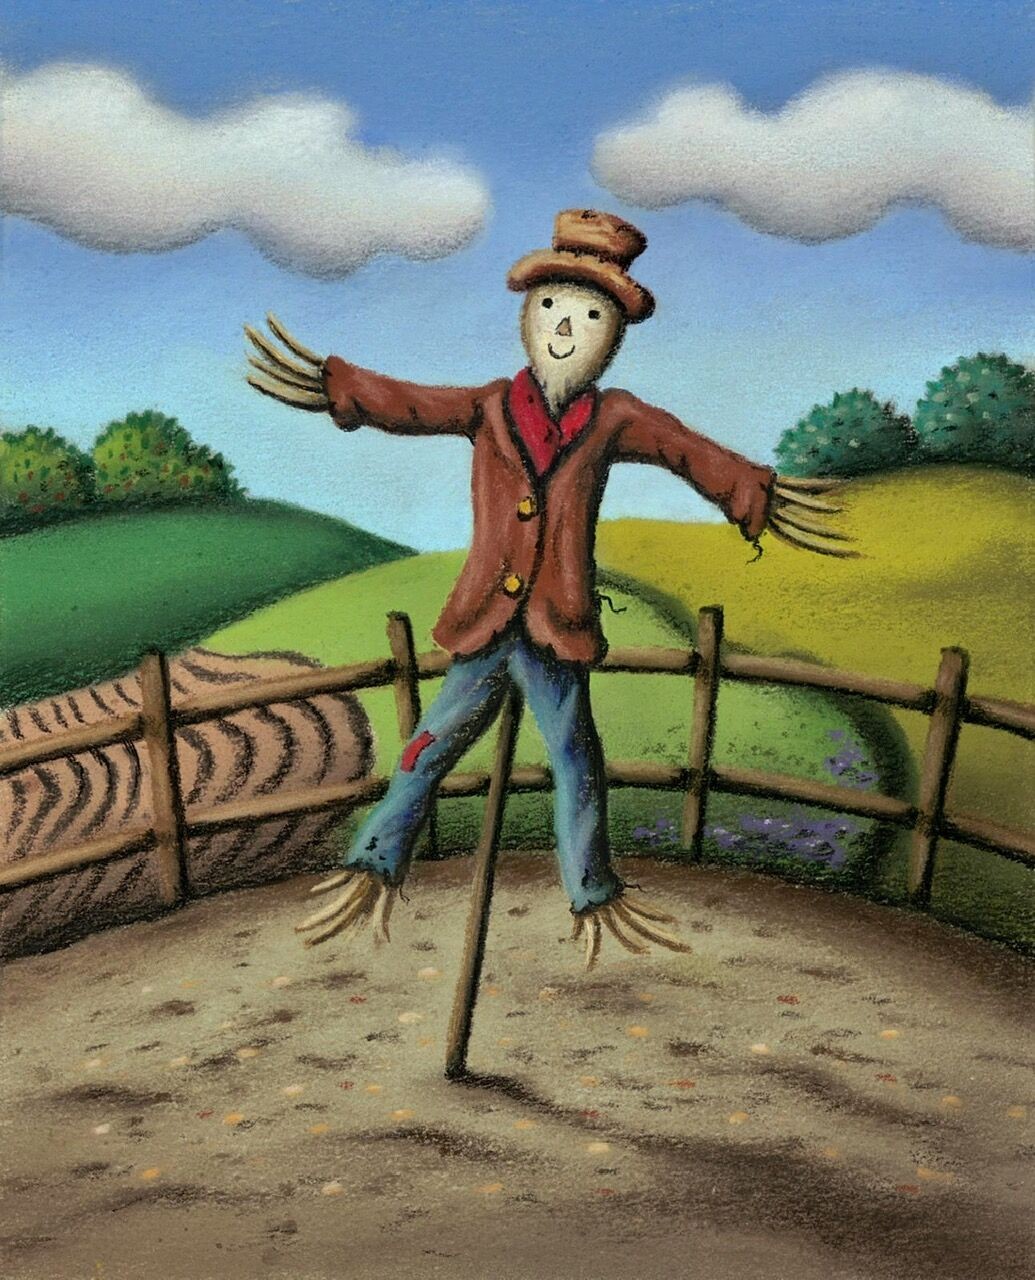 Mr Scarecrow by Paul Horton